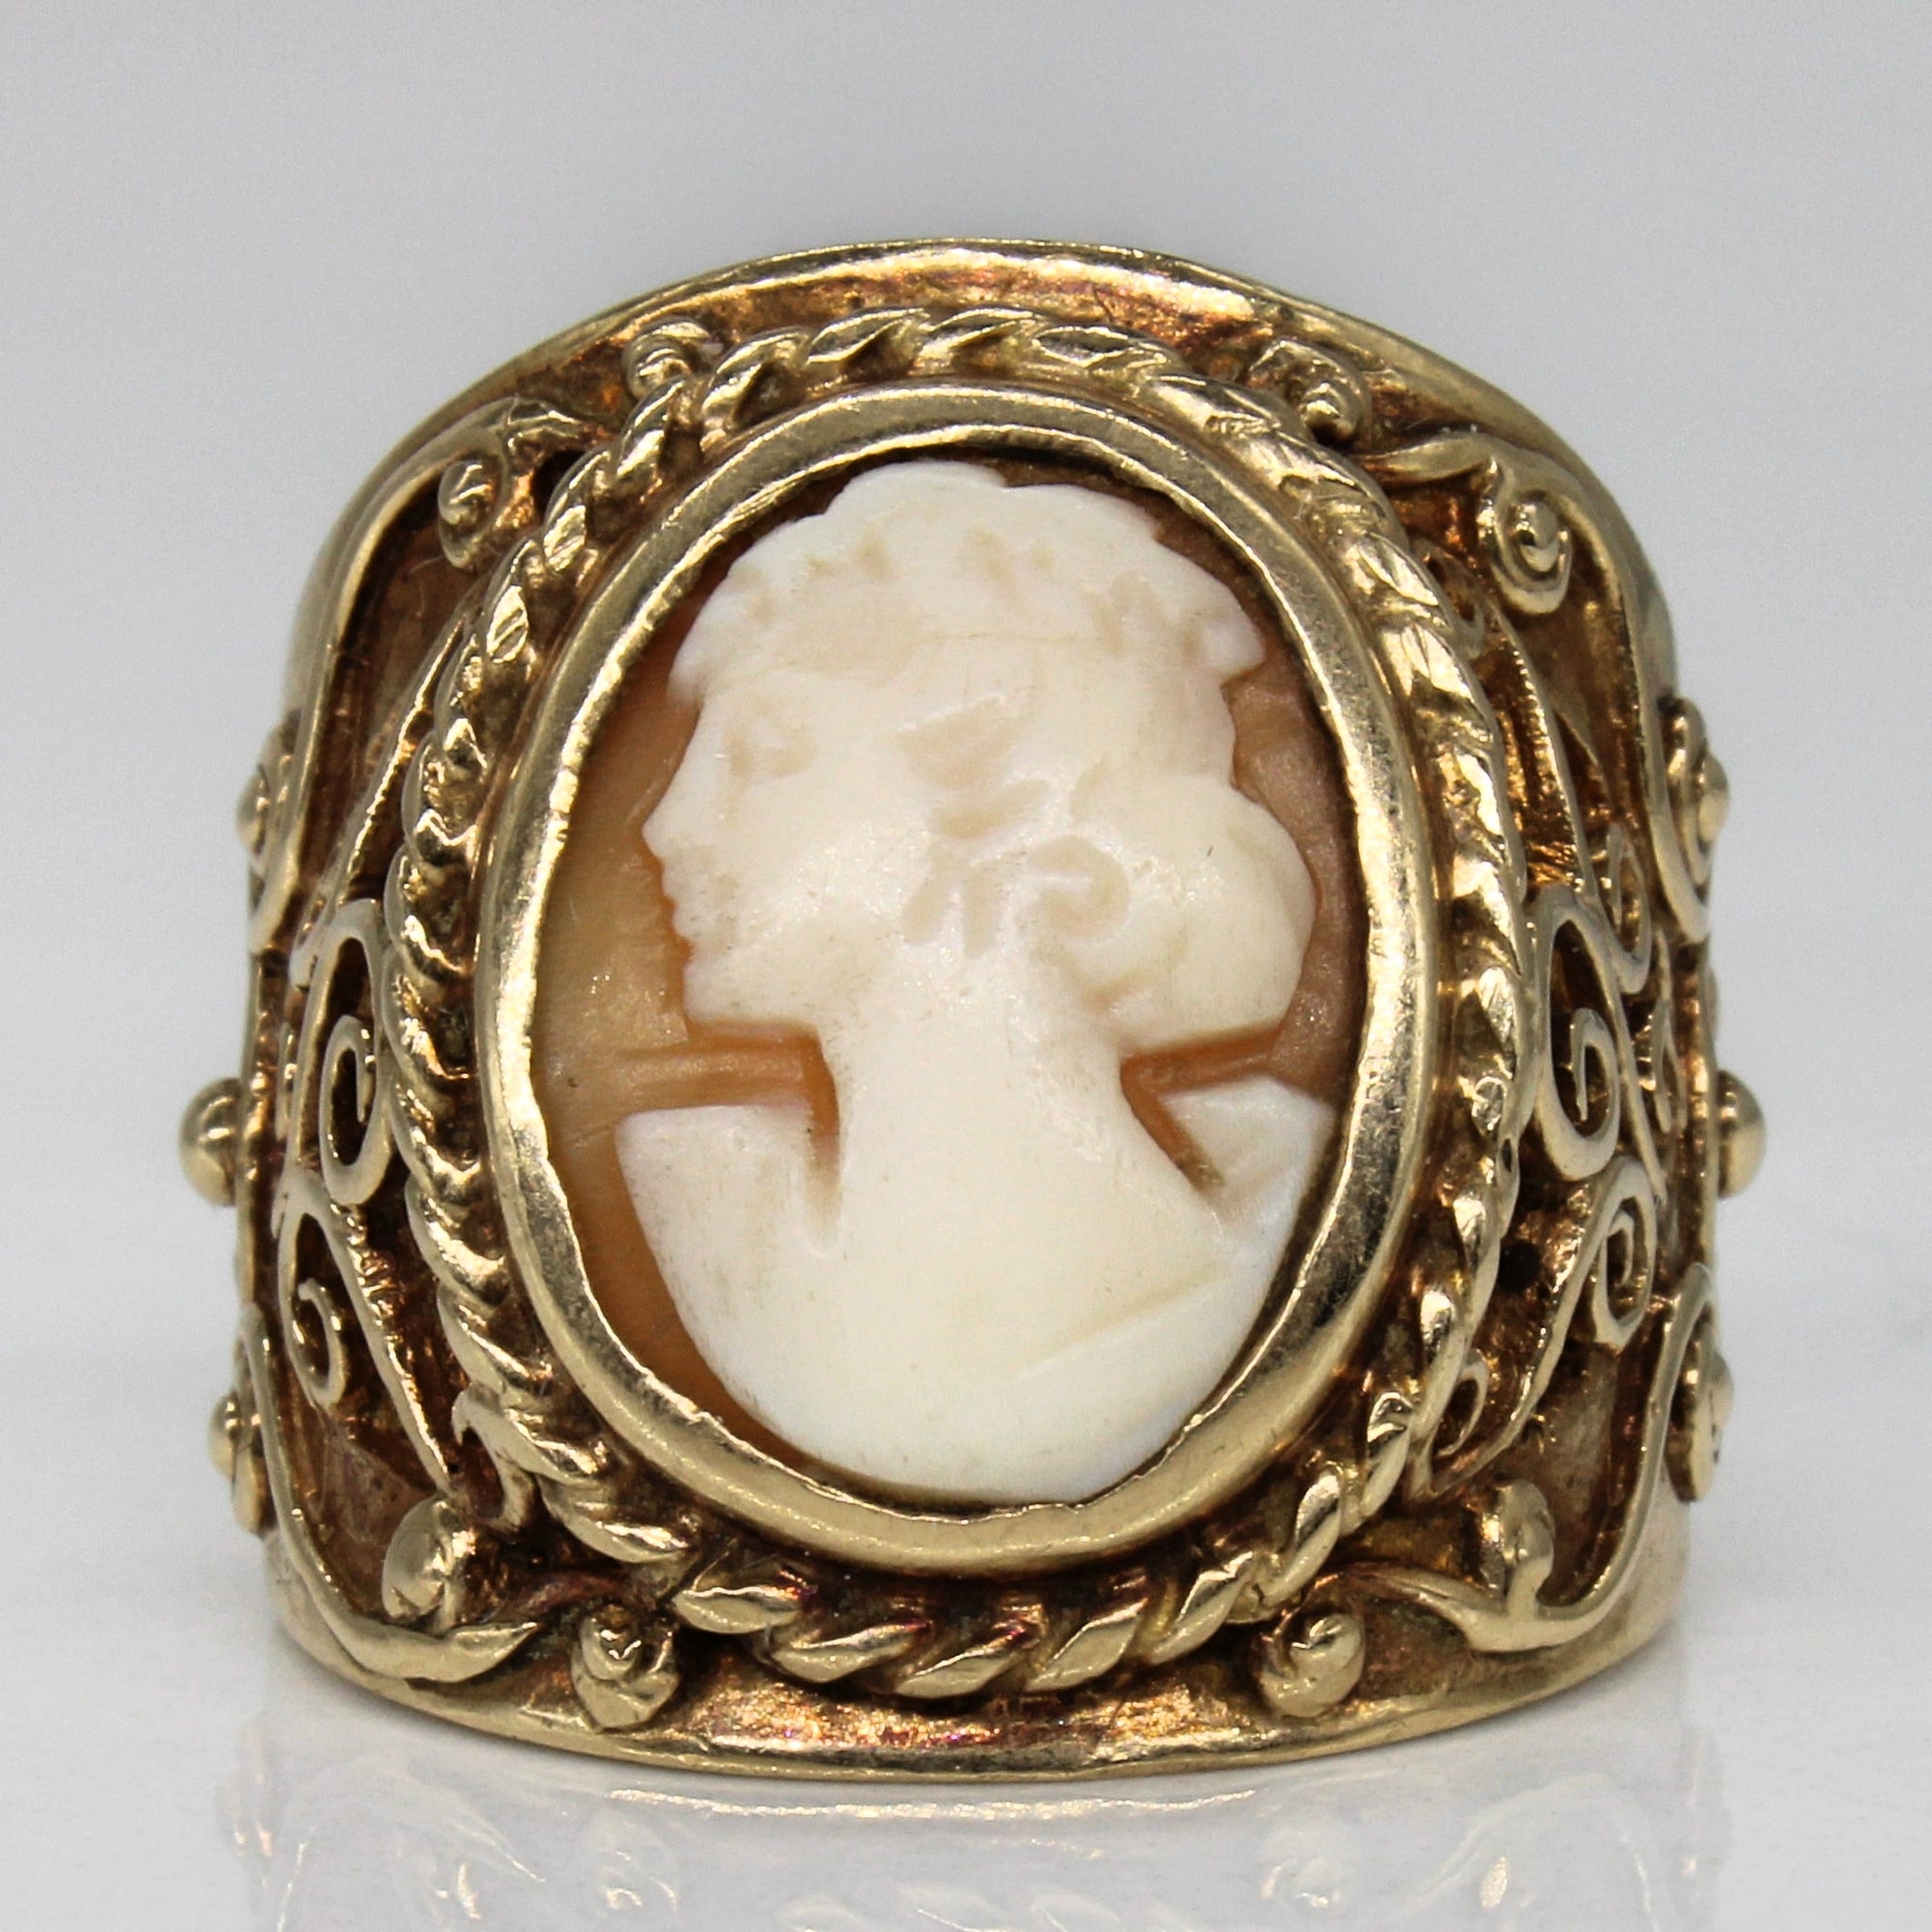 Birks' Seashell Cameo Ornate Ring | 2.60ct | SZ 7.25 |